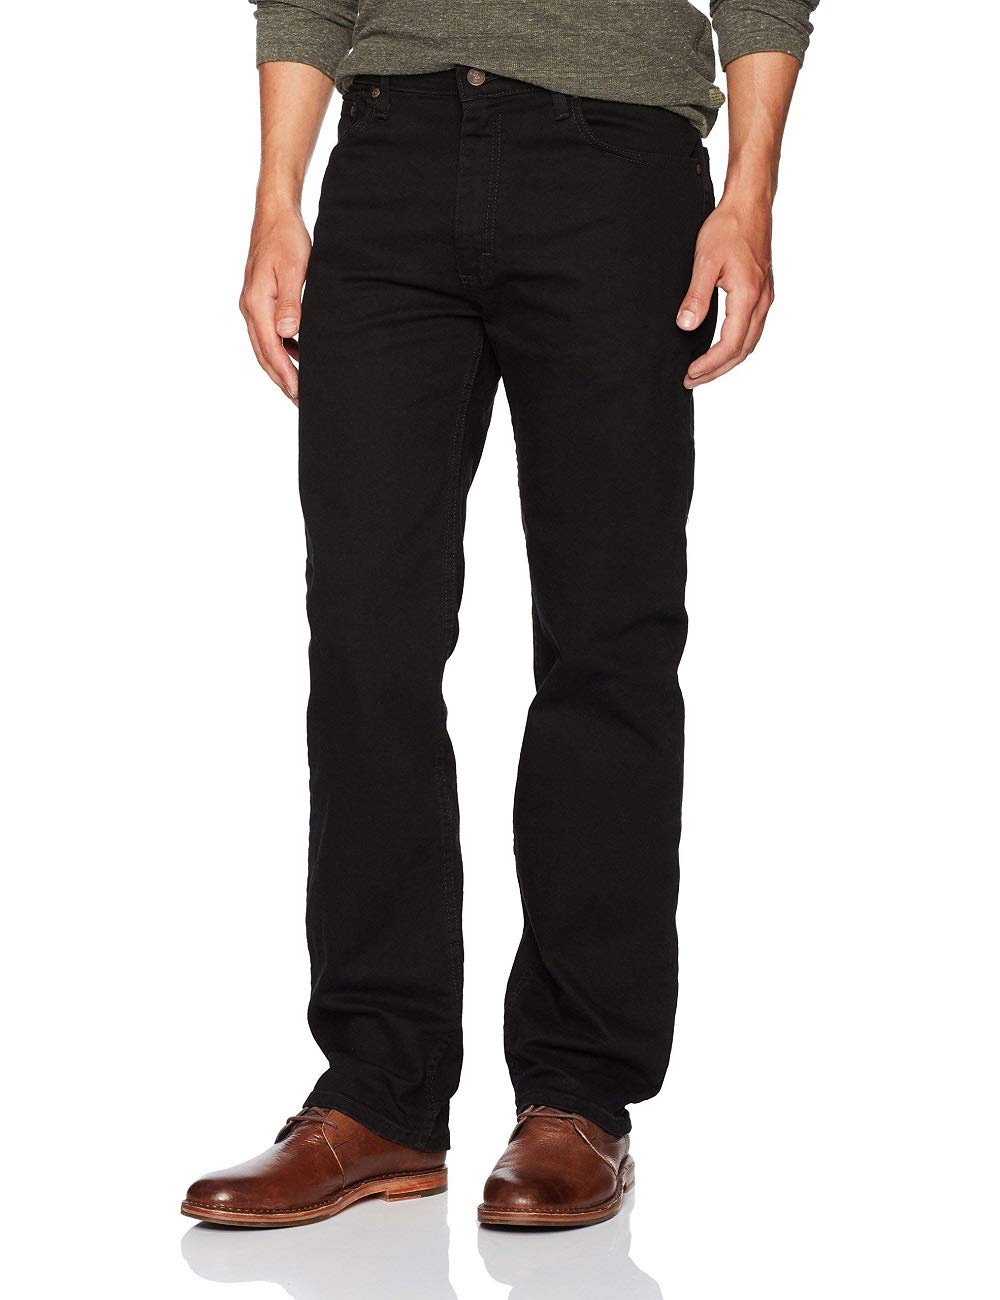 Wrangler Authentics Men's Regular Fit Comfort Flex Waist Jean, Black, 32W x 29L